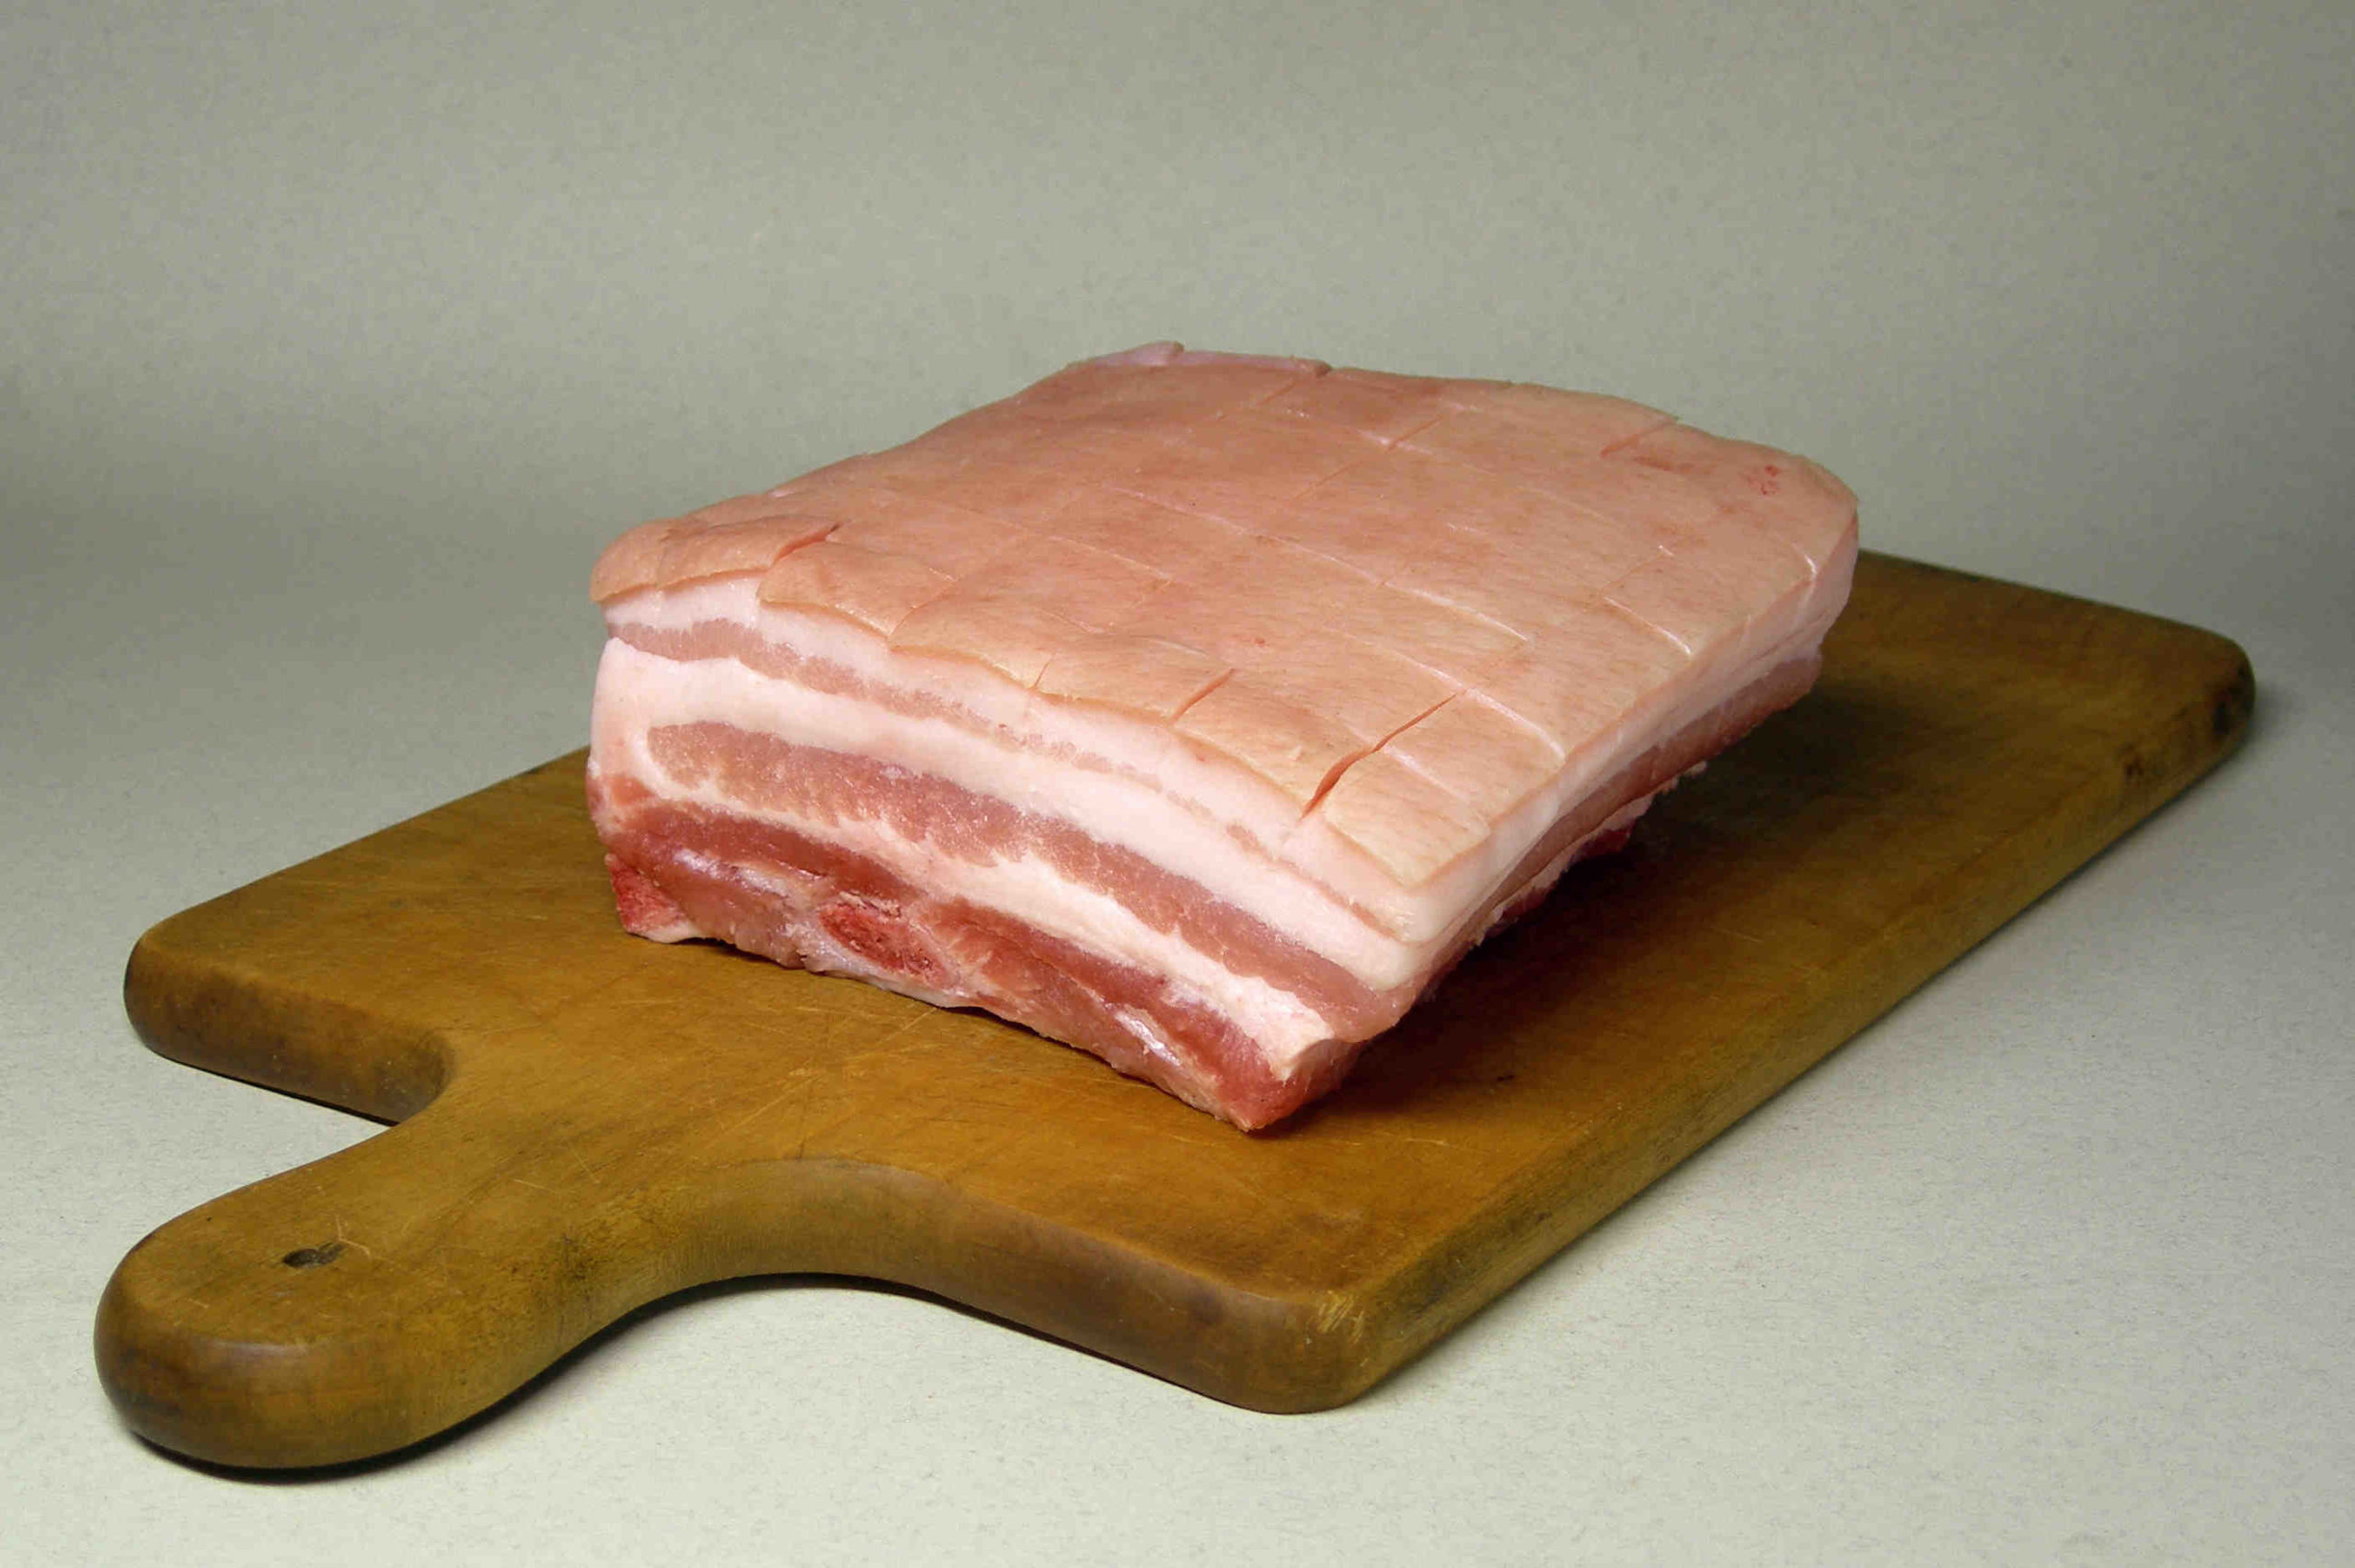 Is swine a pork?